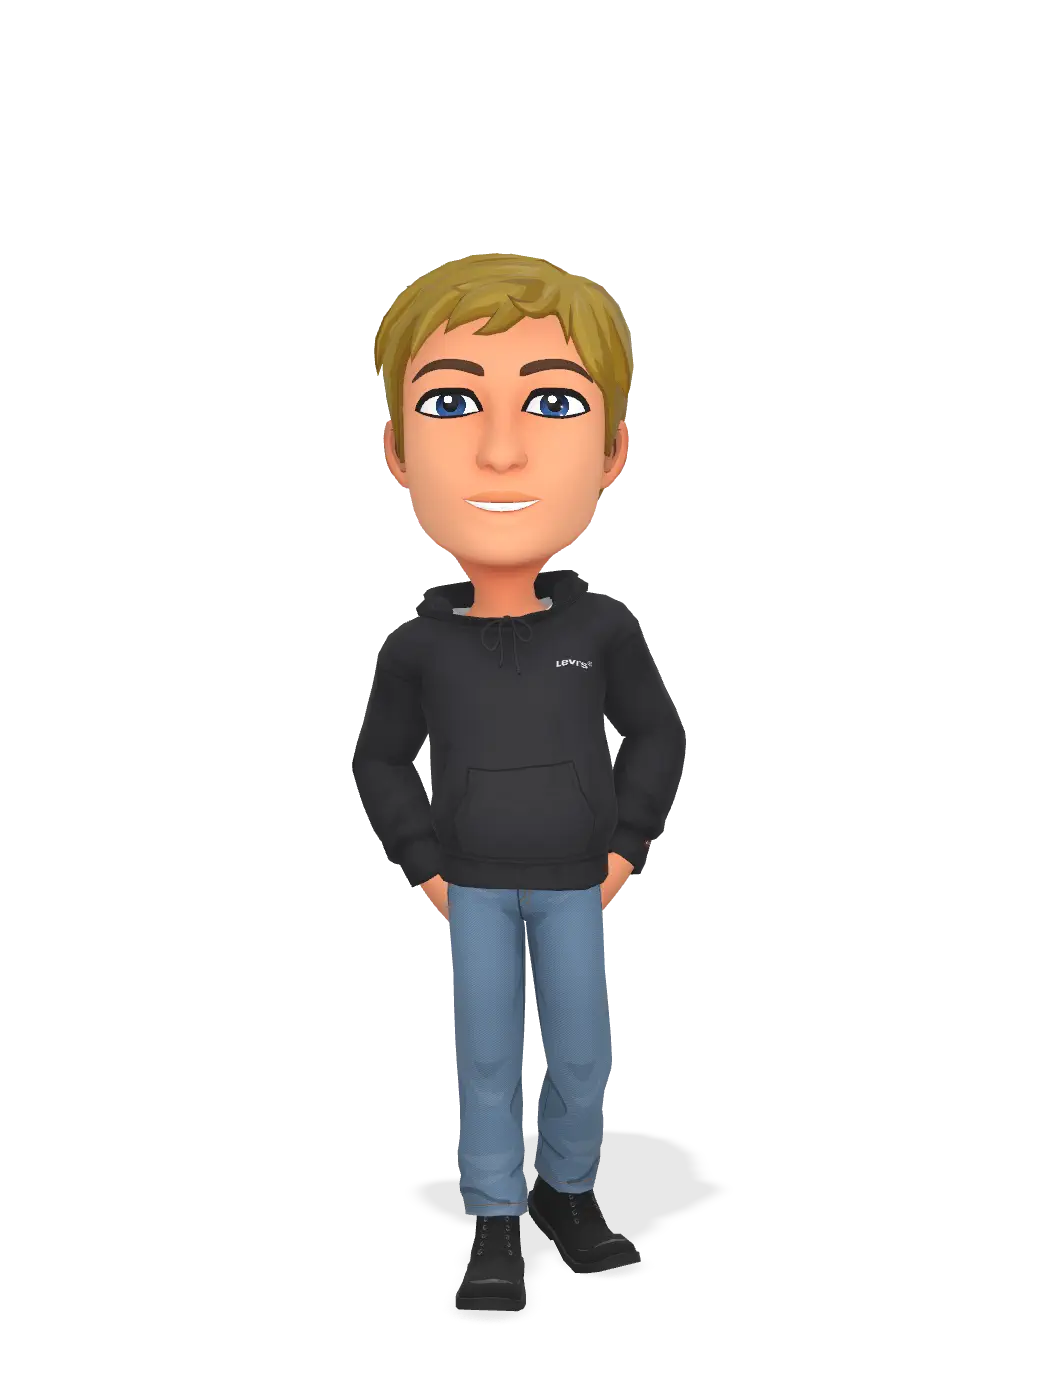 3D Bitmoji for juicepromotions avatar